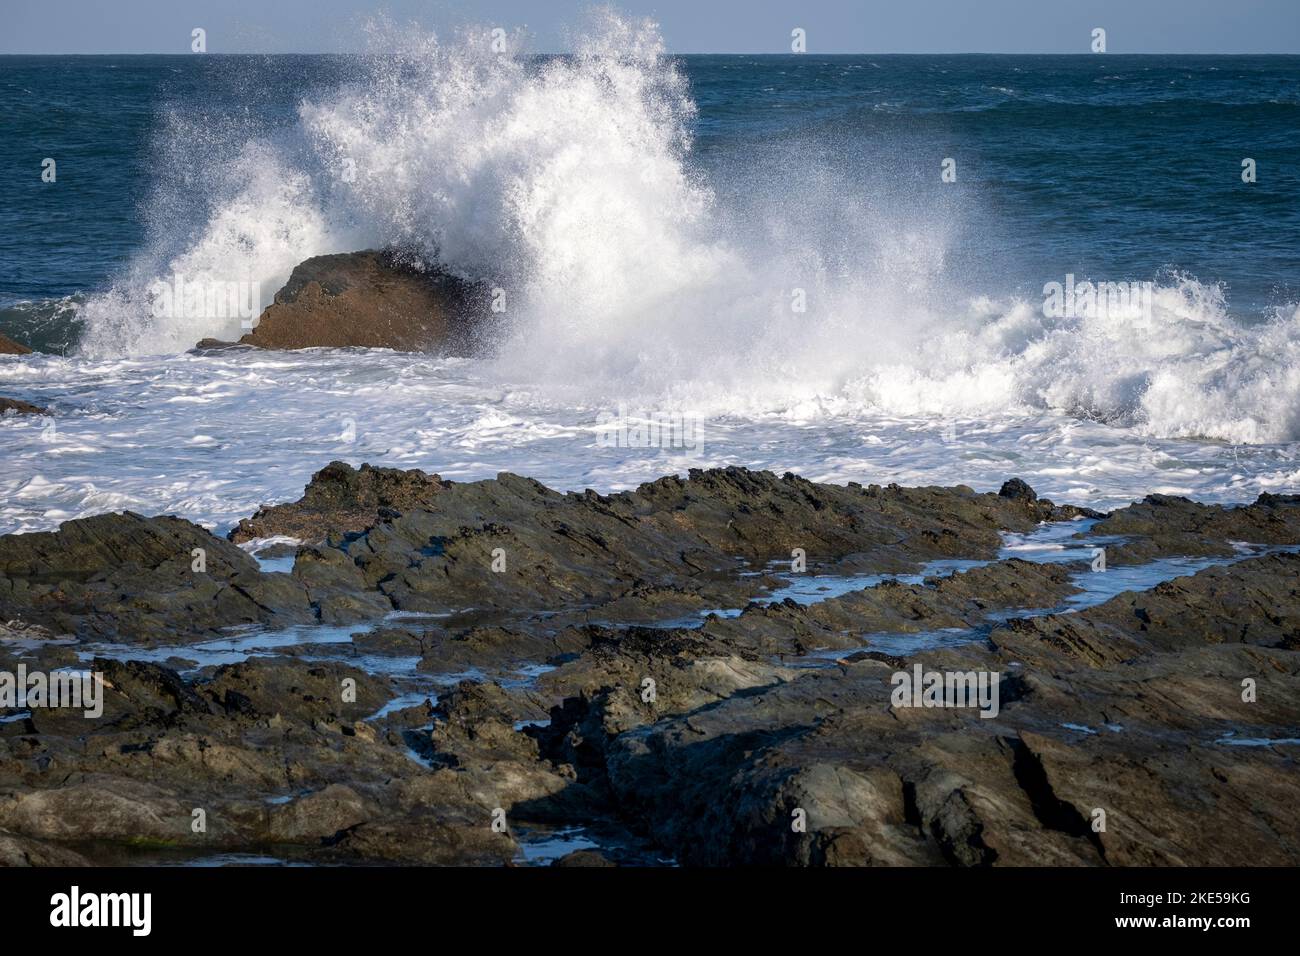 Waves breaking on rocks at Prawle Point, East Prawle, Devon Stock Photo